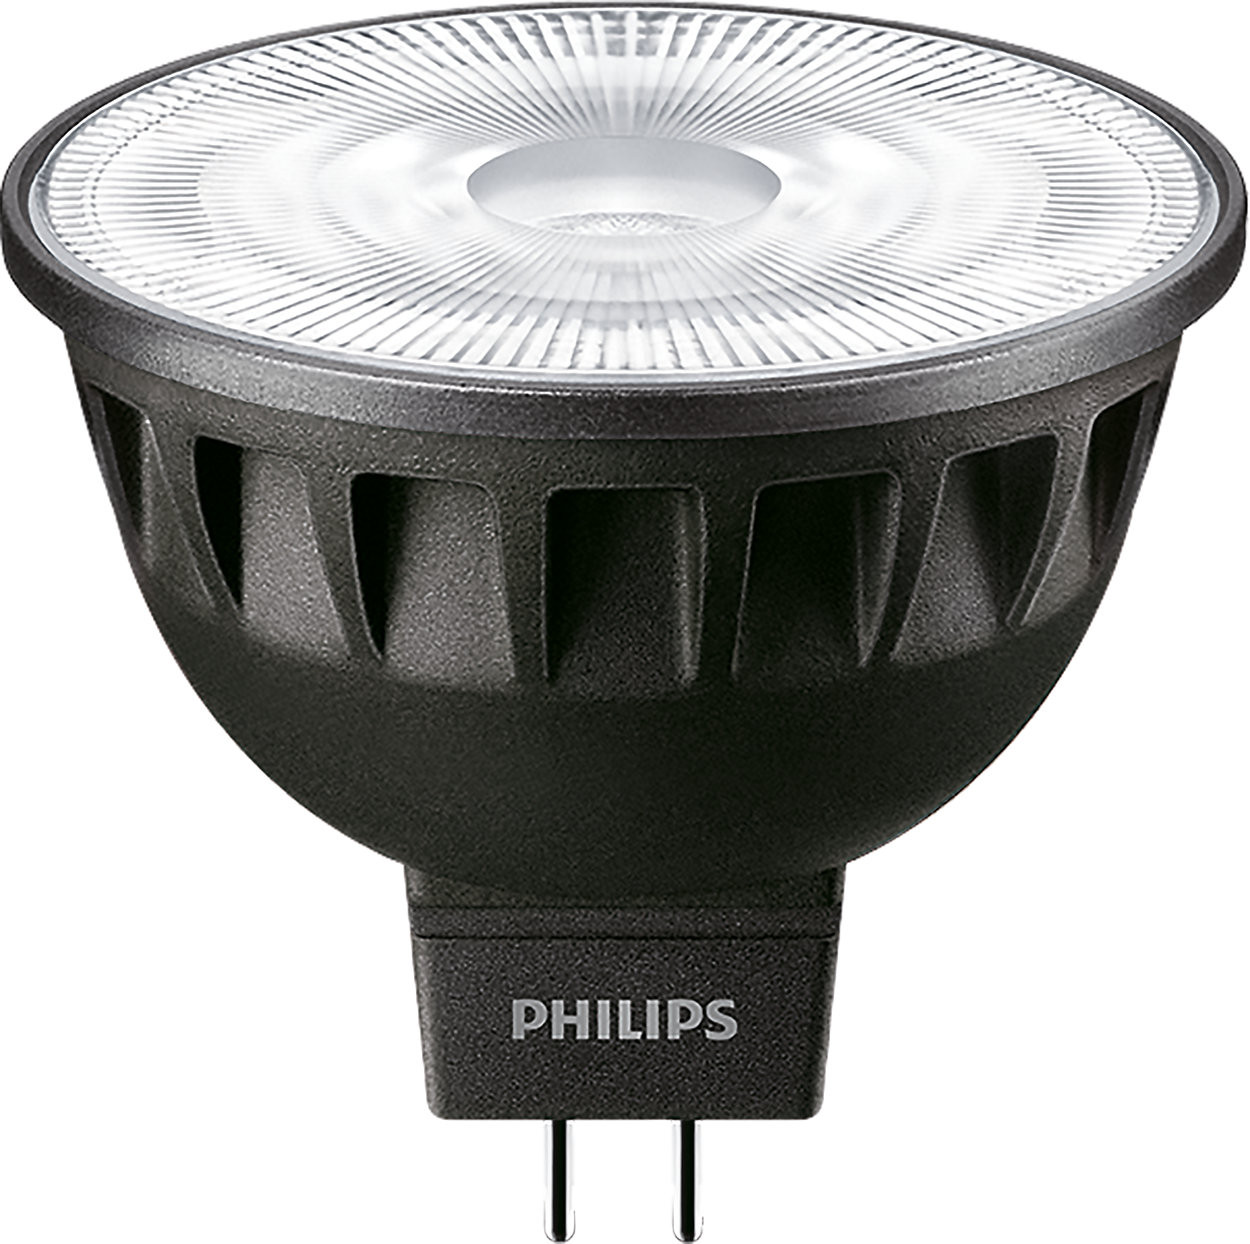 Philips Master LED ExpertColor D 6.5-35W MR16 927 60D